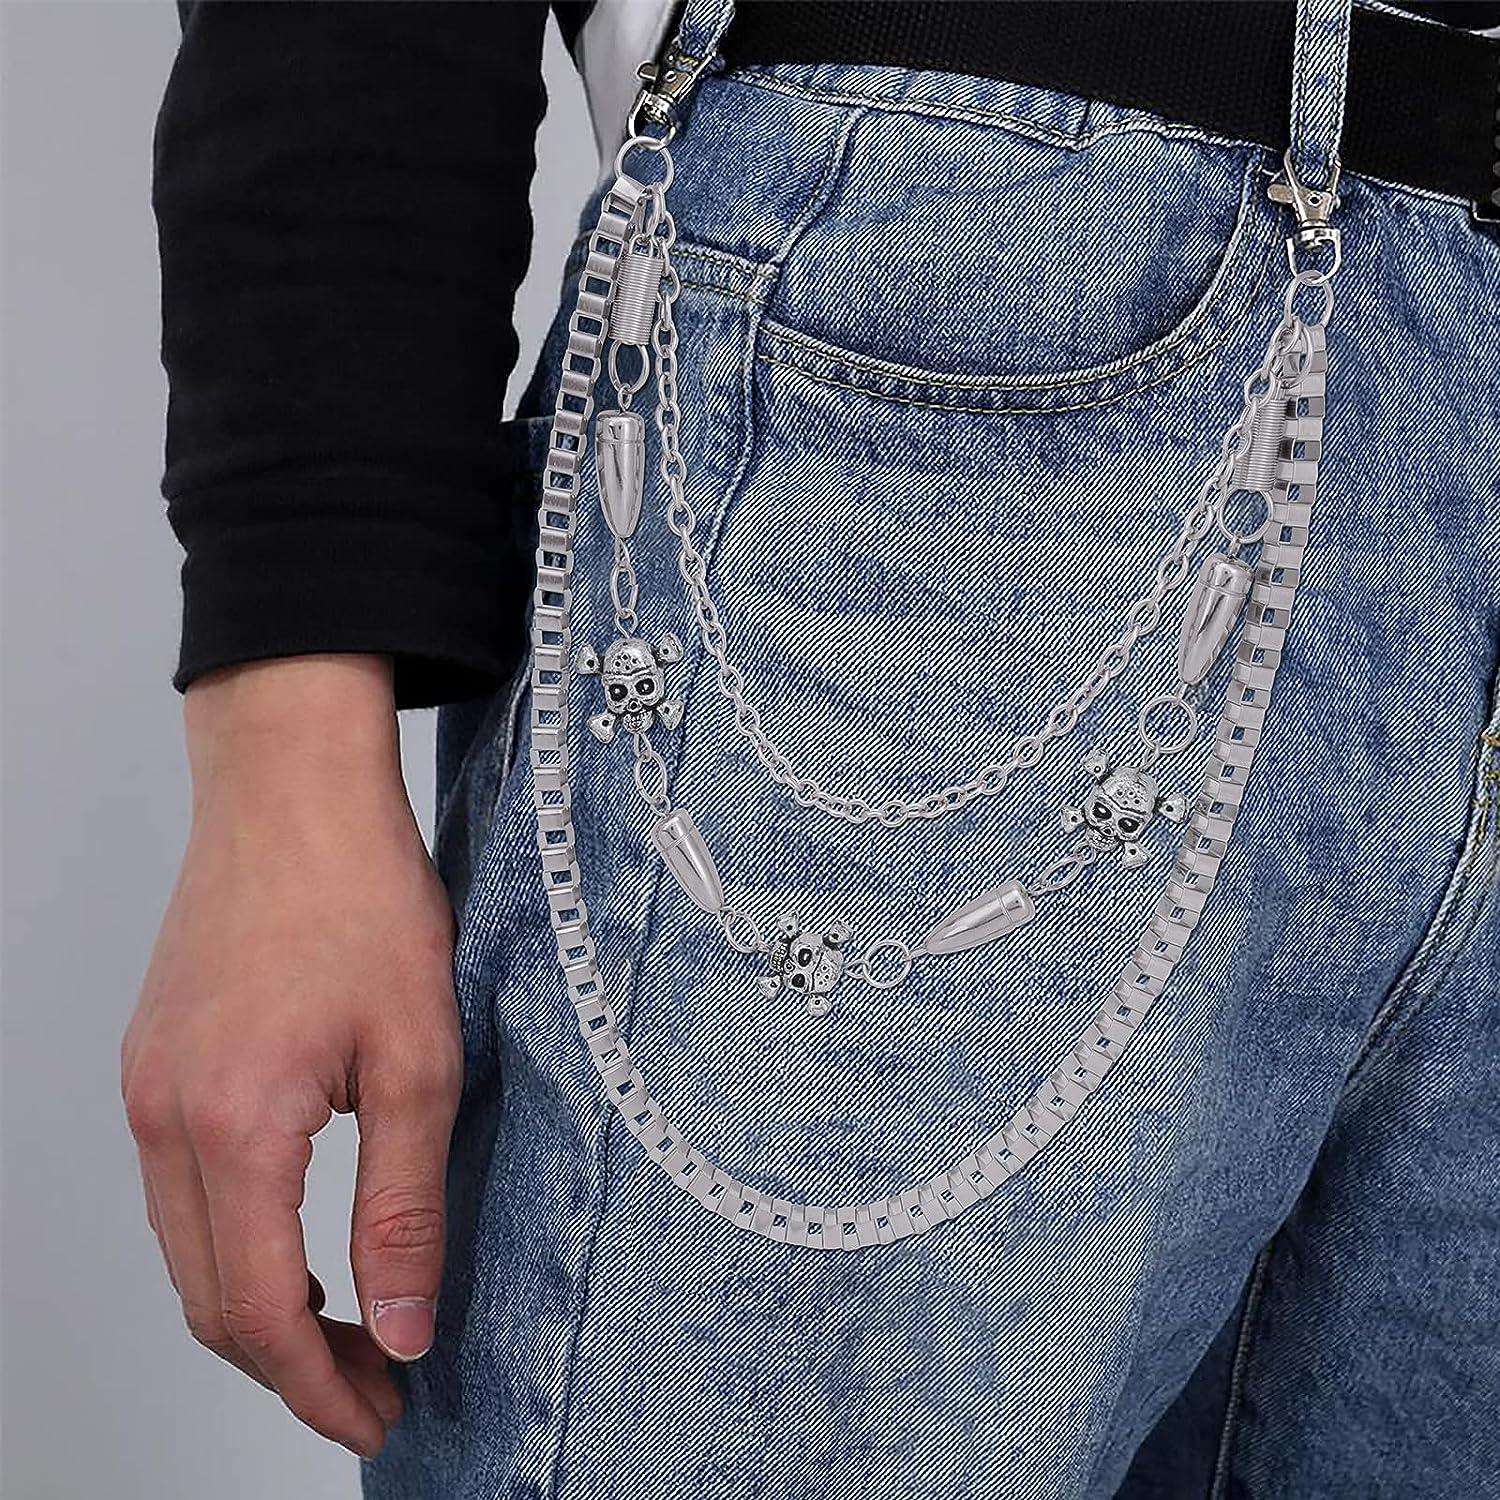 Jeans Chains Wallet Chain Pants Chain Pocket Chain Skull Chains Hip Hop  Rock Chain Punk Gothic Belt Chain Biker Trouser Chain Silver-c